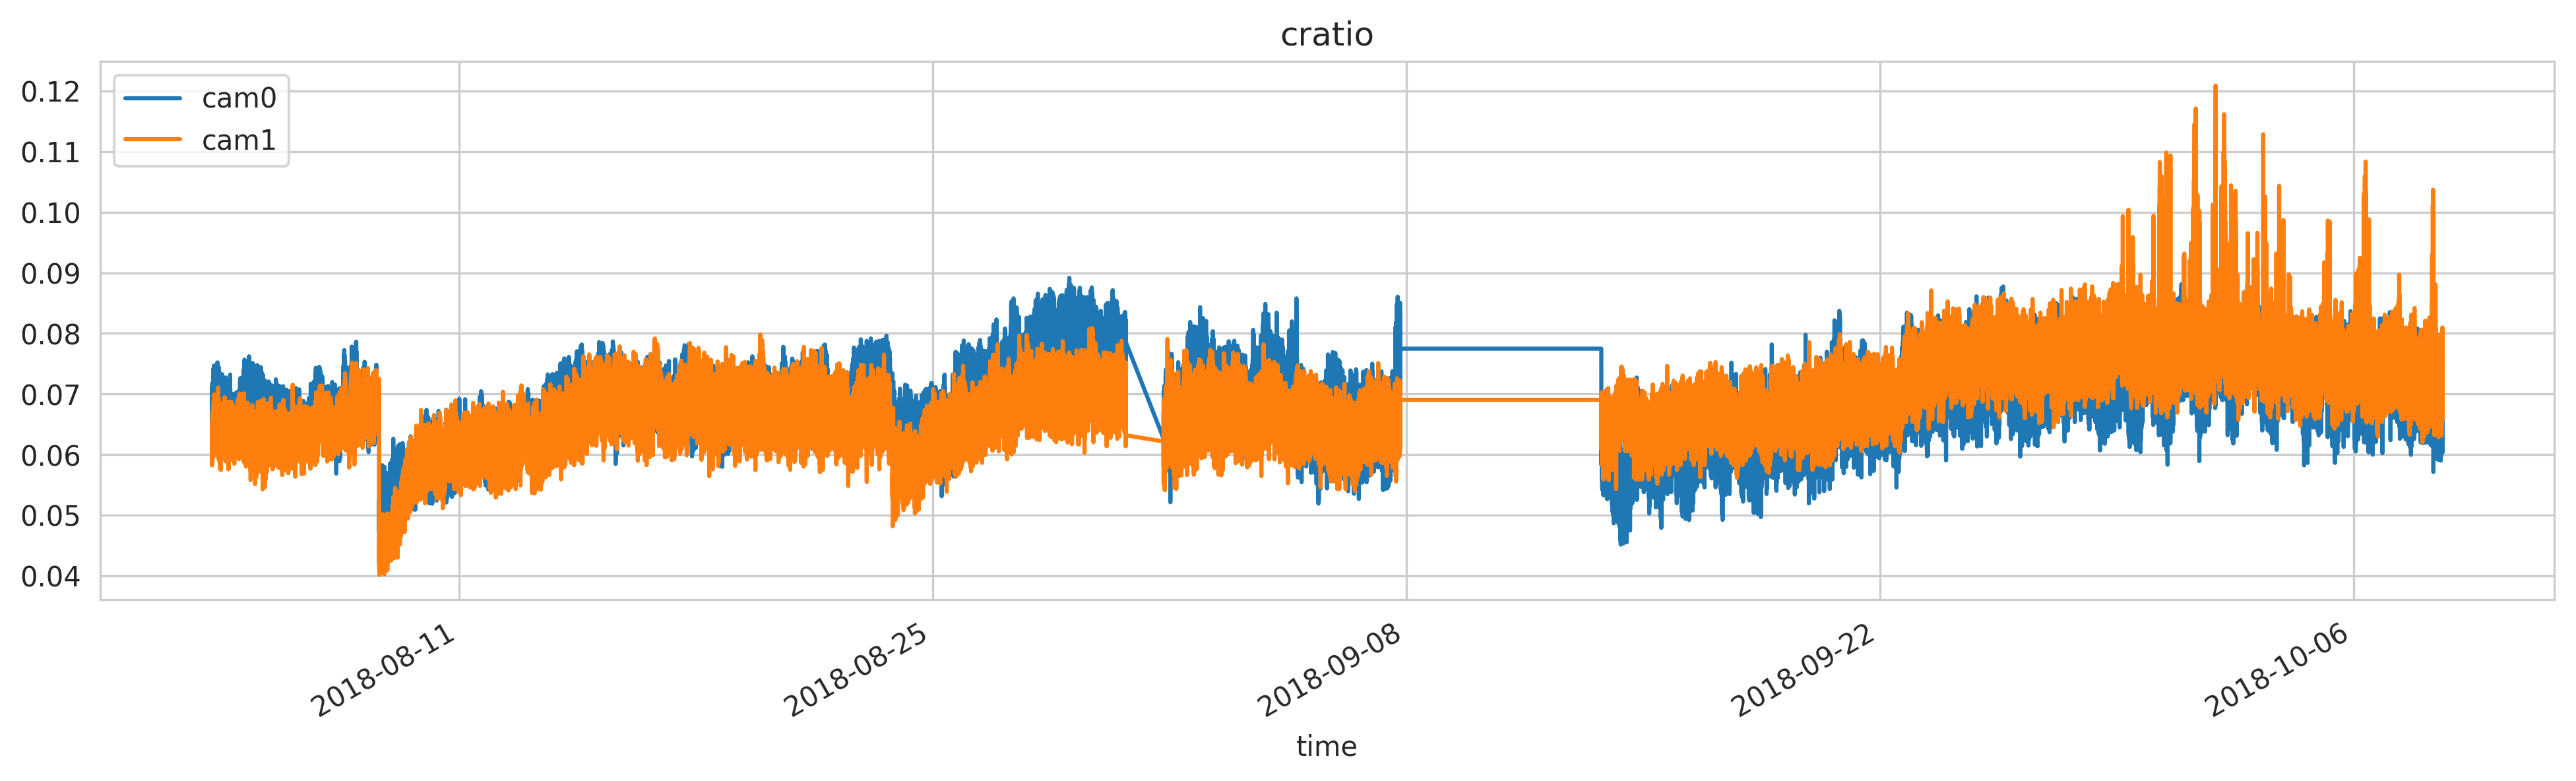 cratio_metrics live preview